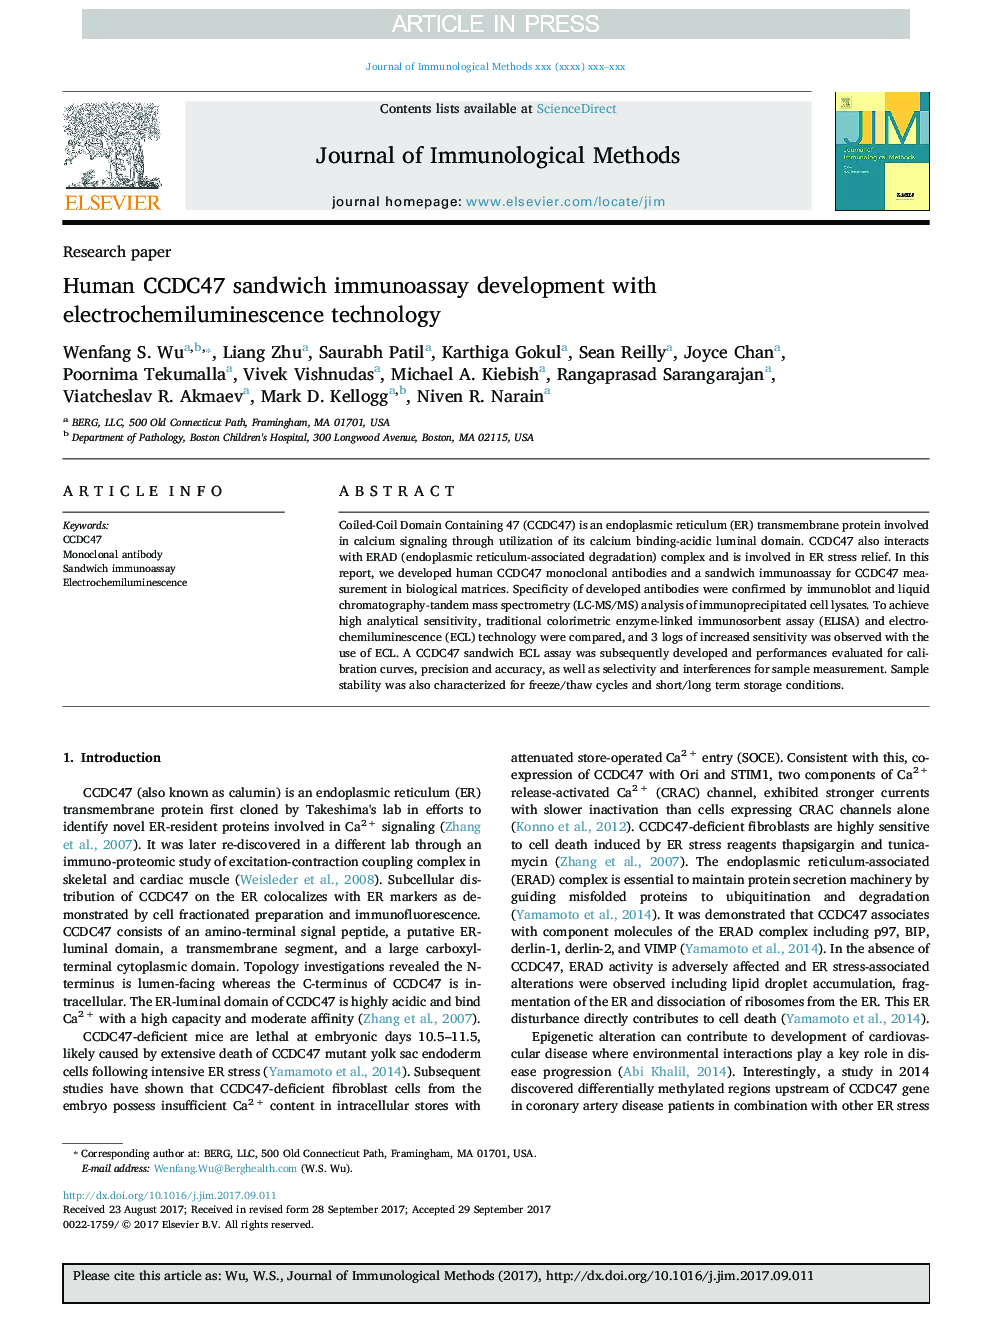 Human CCDC47 sandwich immunoassay development with electrochemiluminescence technology